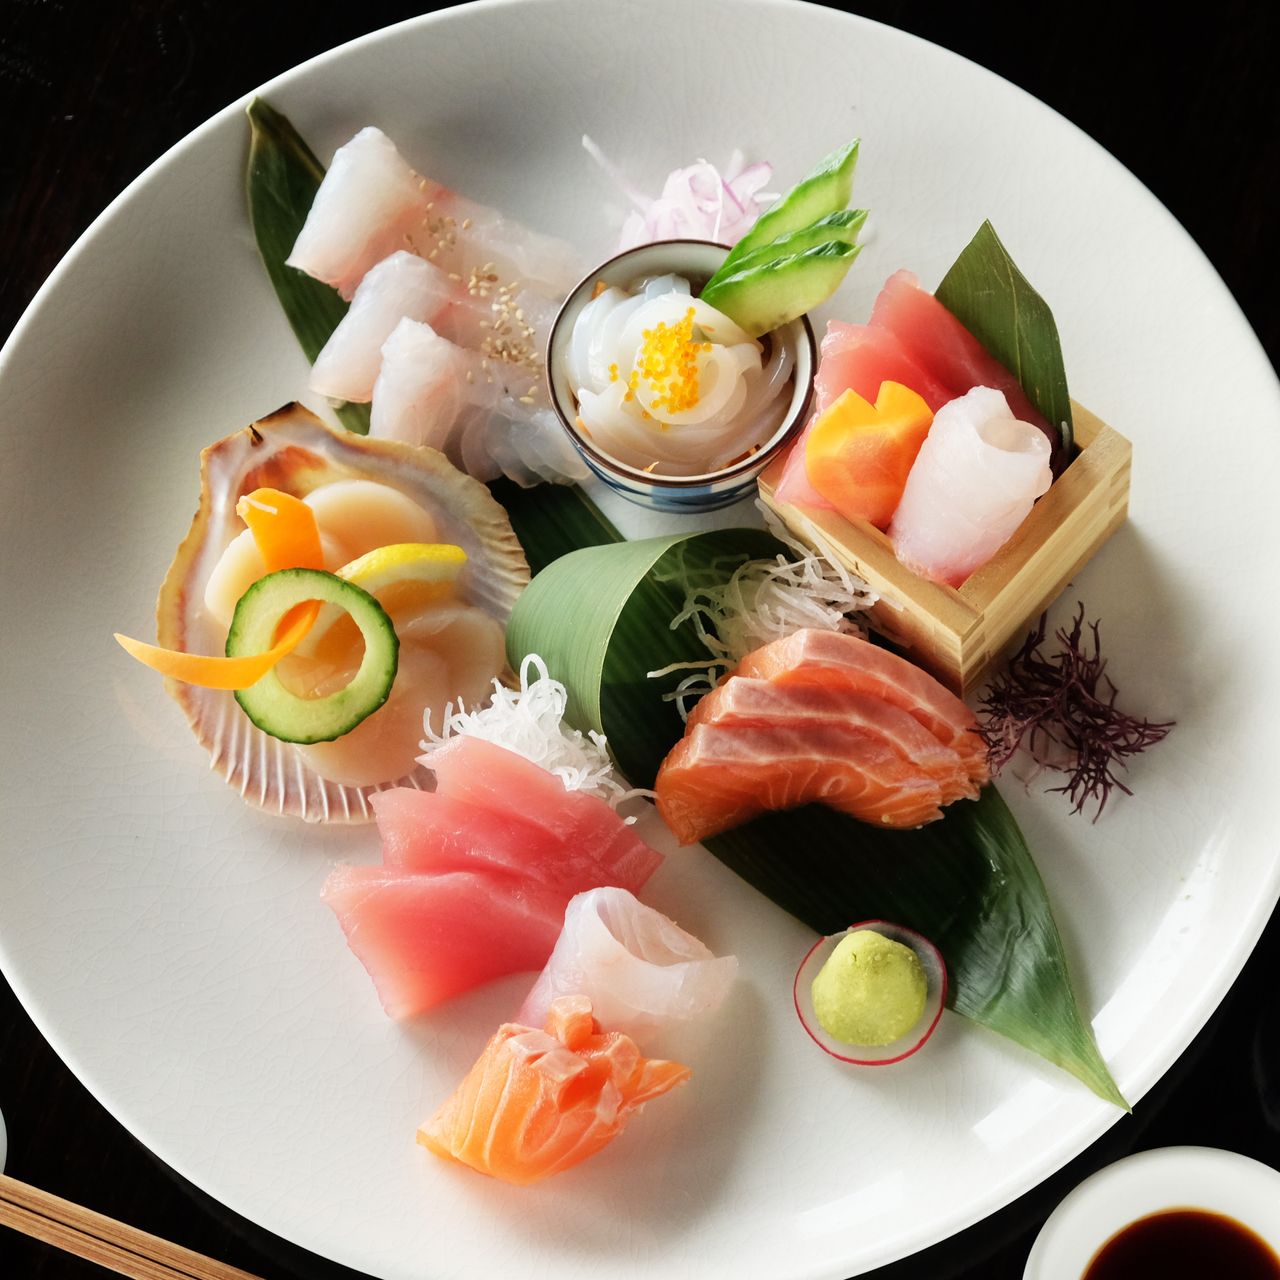 Machine a sushi – Mojo Cuisine